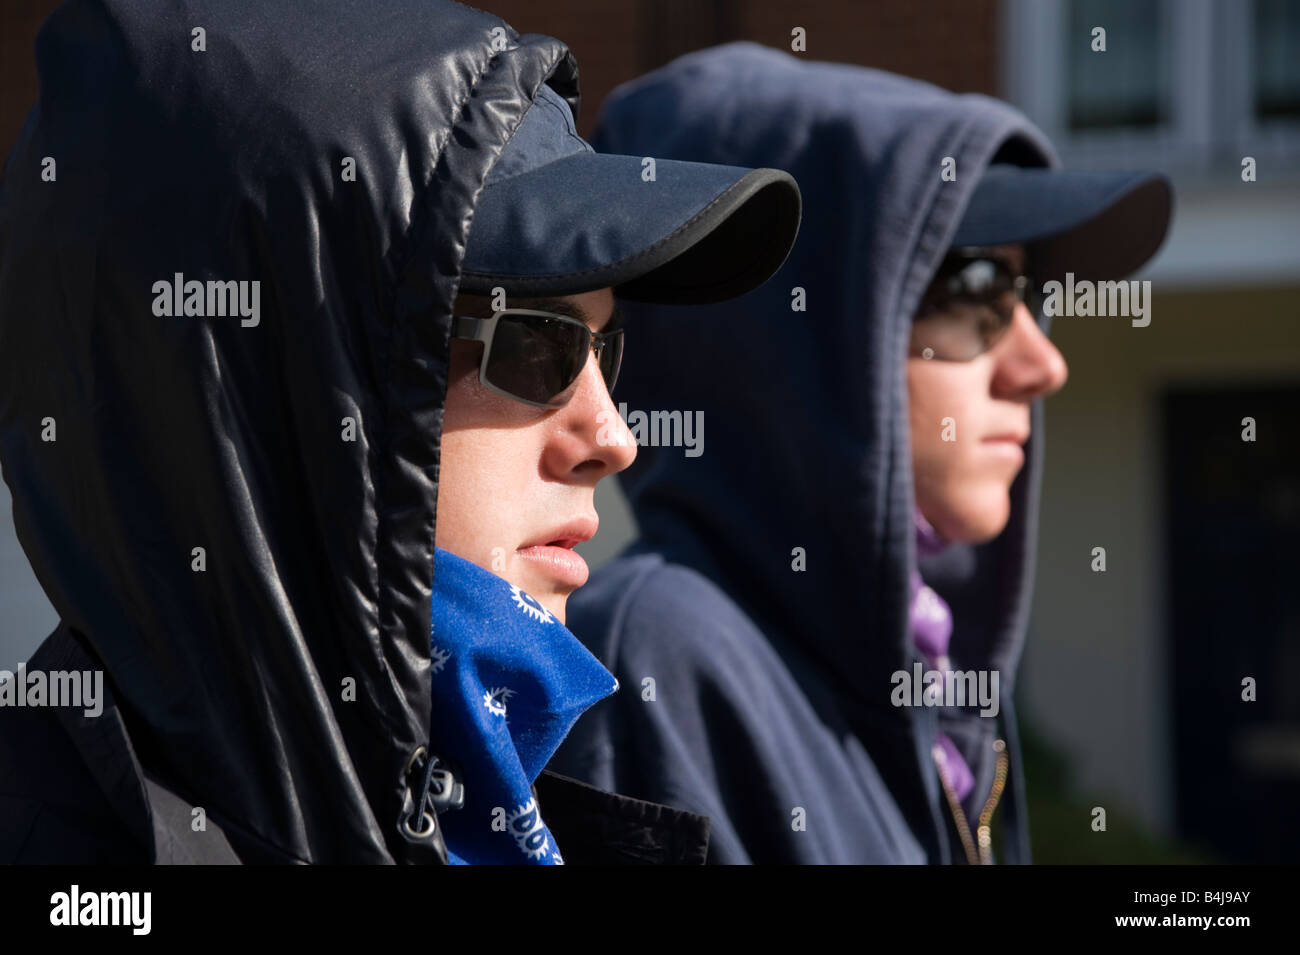 2 teenage boys in hoodies and dark glasses Stock Photo